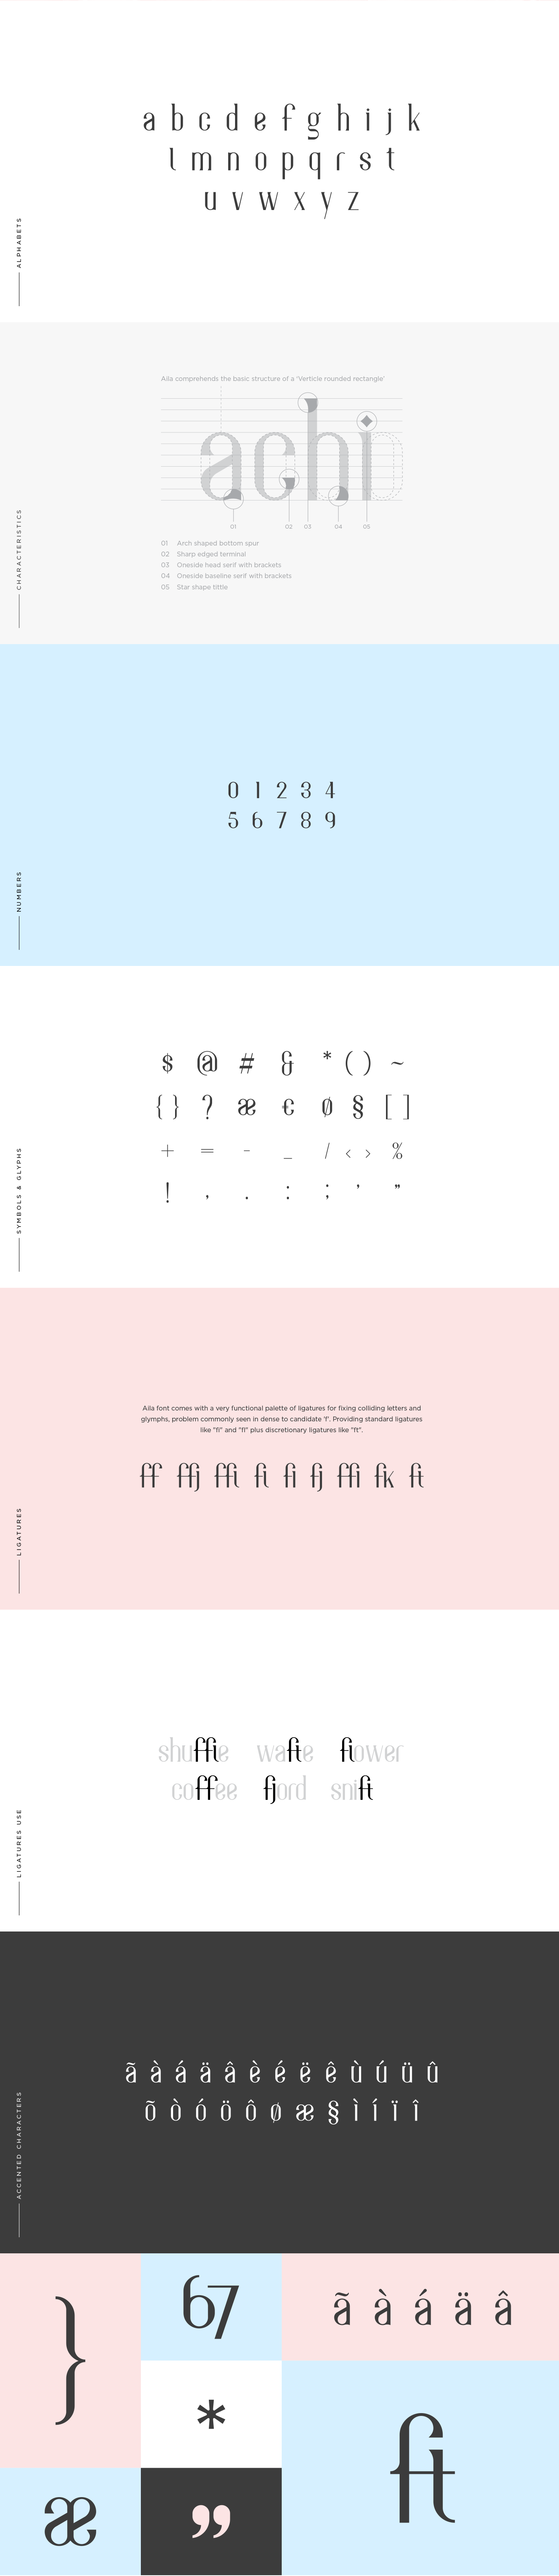 Aila Free Typeface - sans-serif